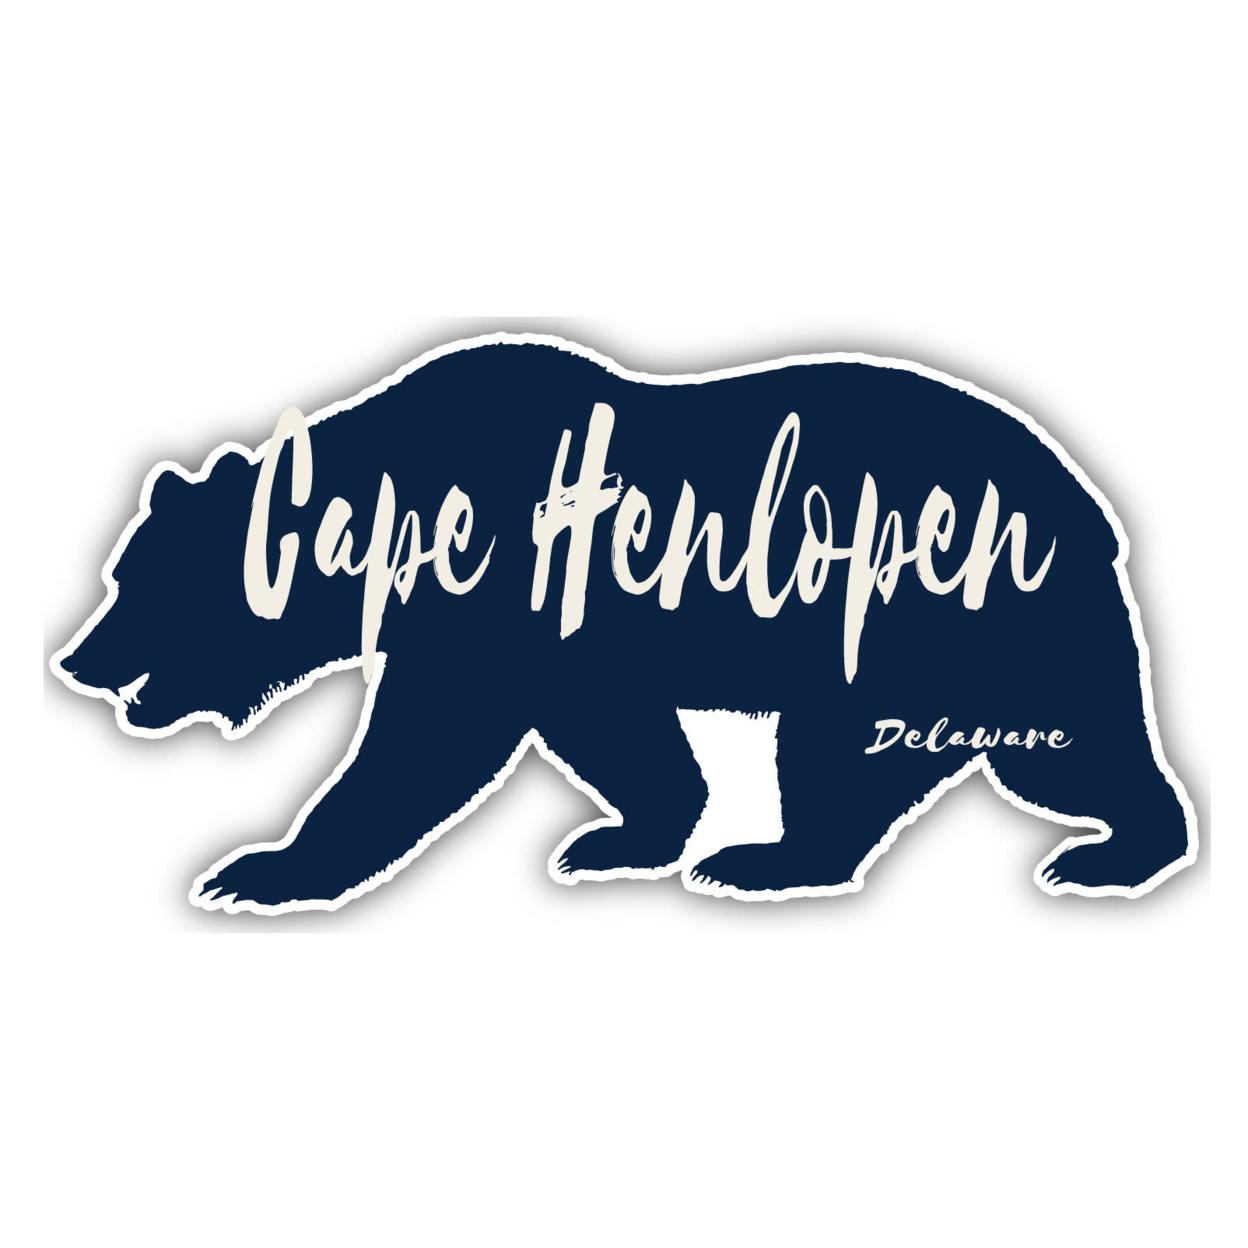 Cape Henlopen Delaware Souvenir Decorative Stickers (Choose Theme And Size) - Single Unit, 12-Inch, Camp Life